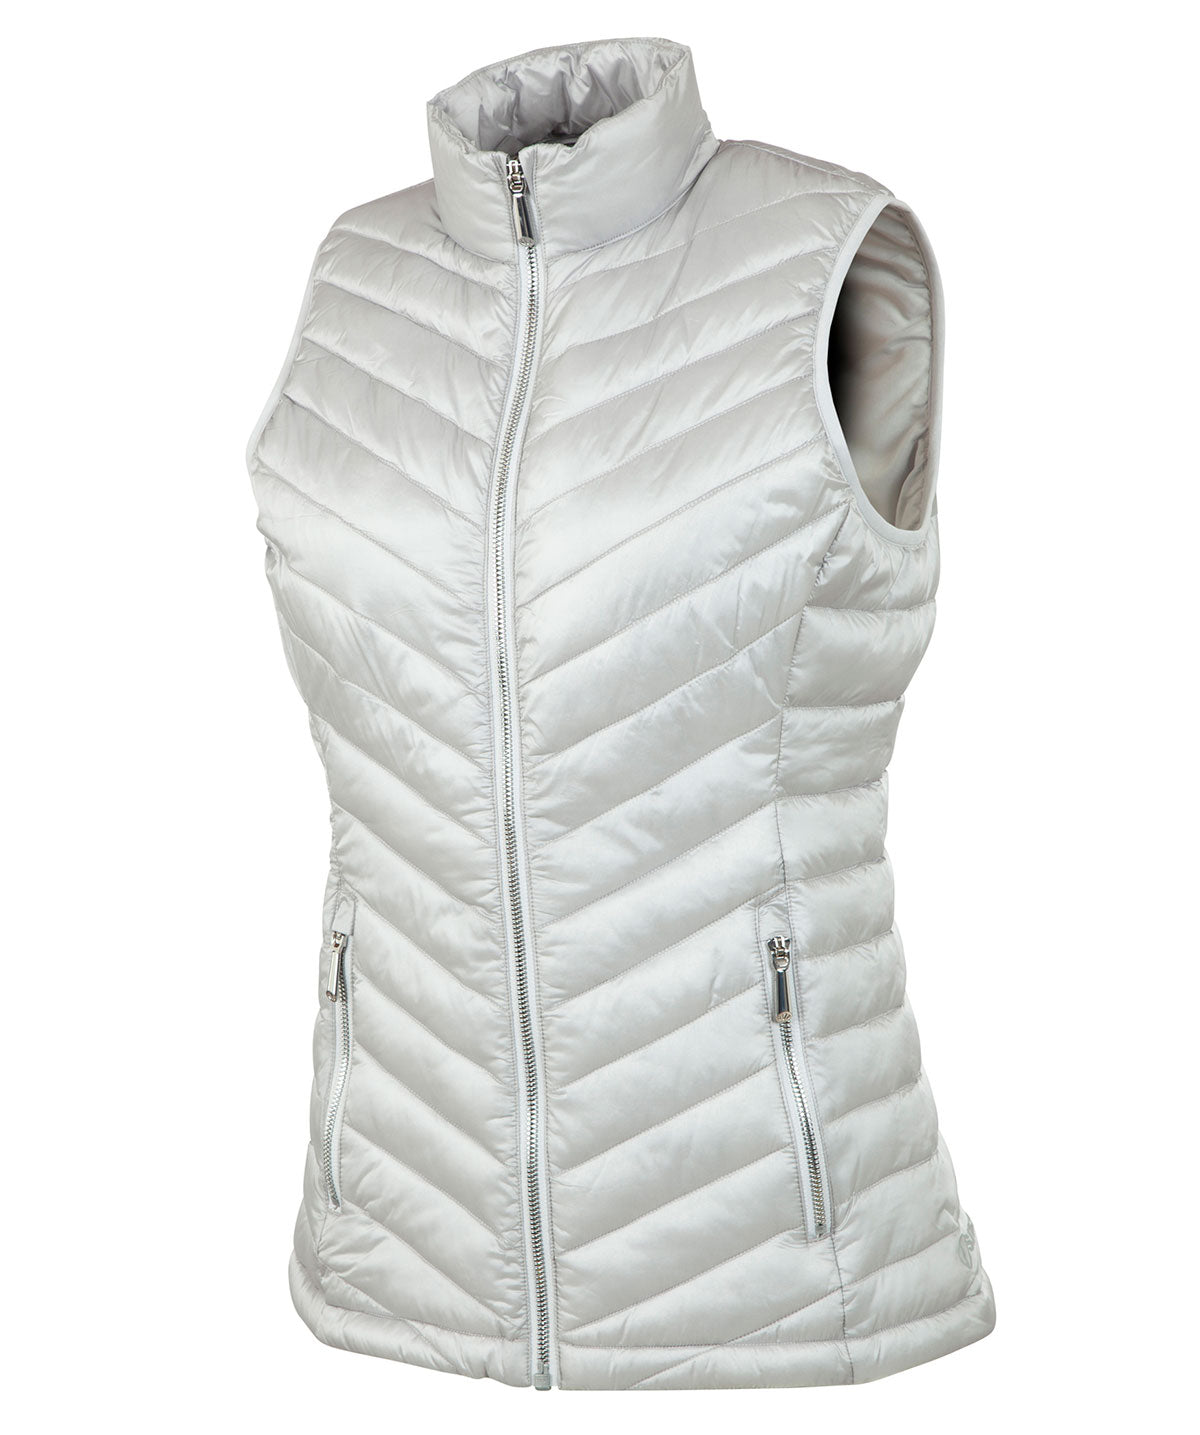 Damart Thermal Thermolactyl Soft 2 Light Grey sleeveless vest size